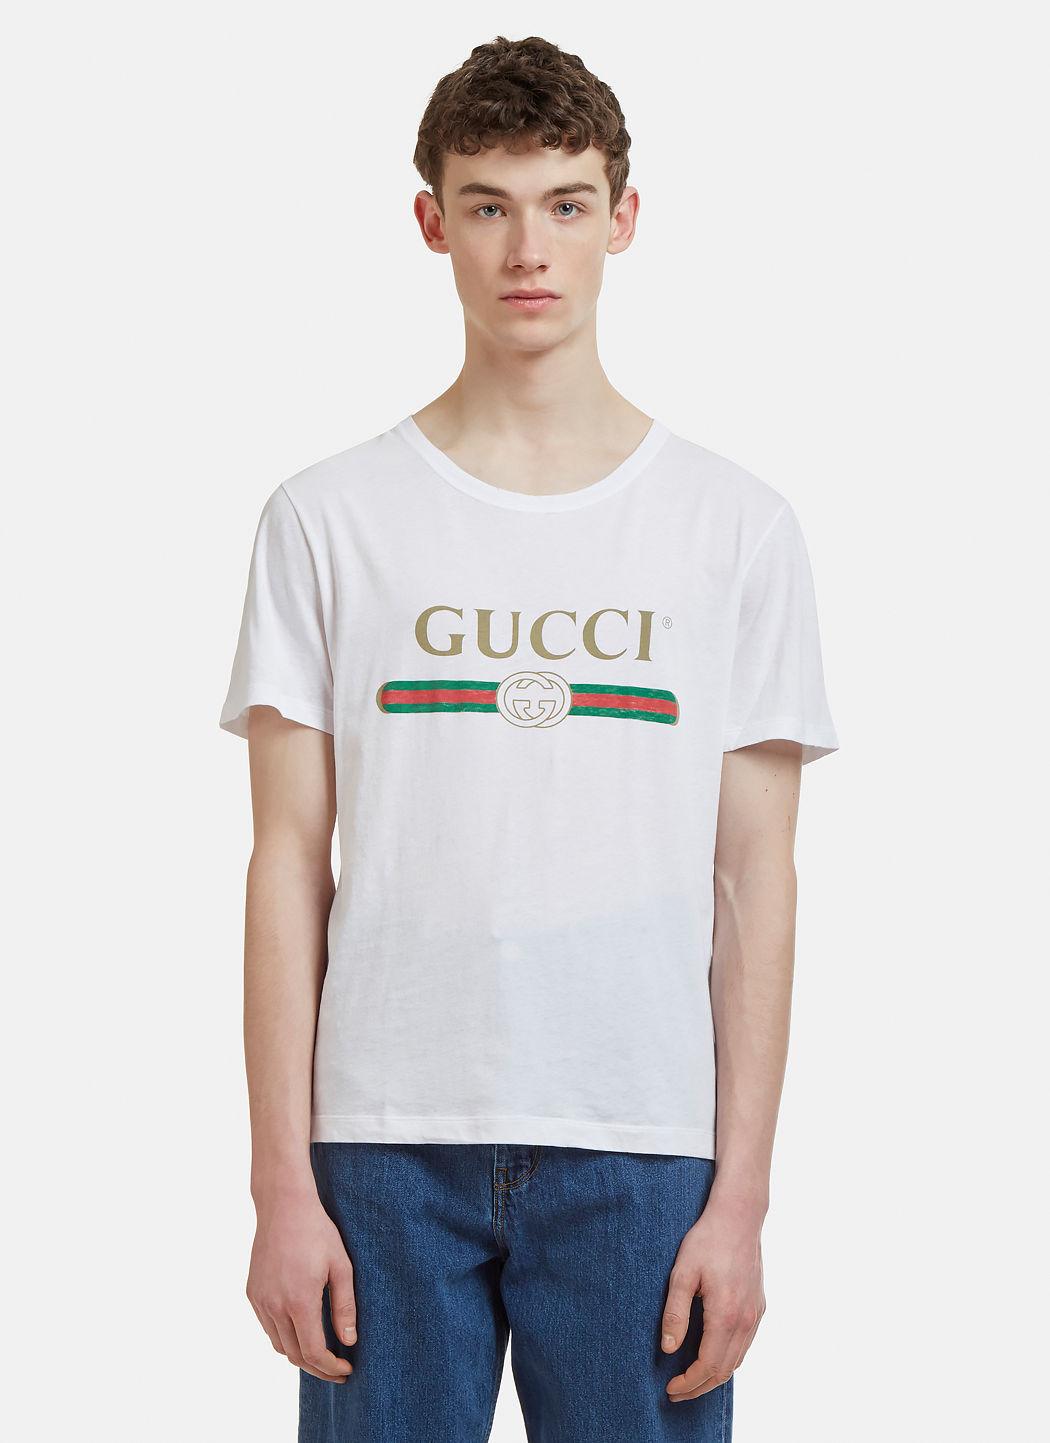 gucci distressed logo t shirt